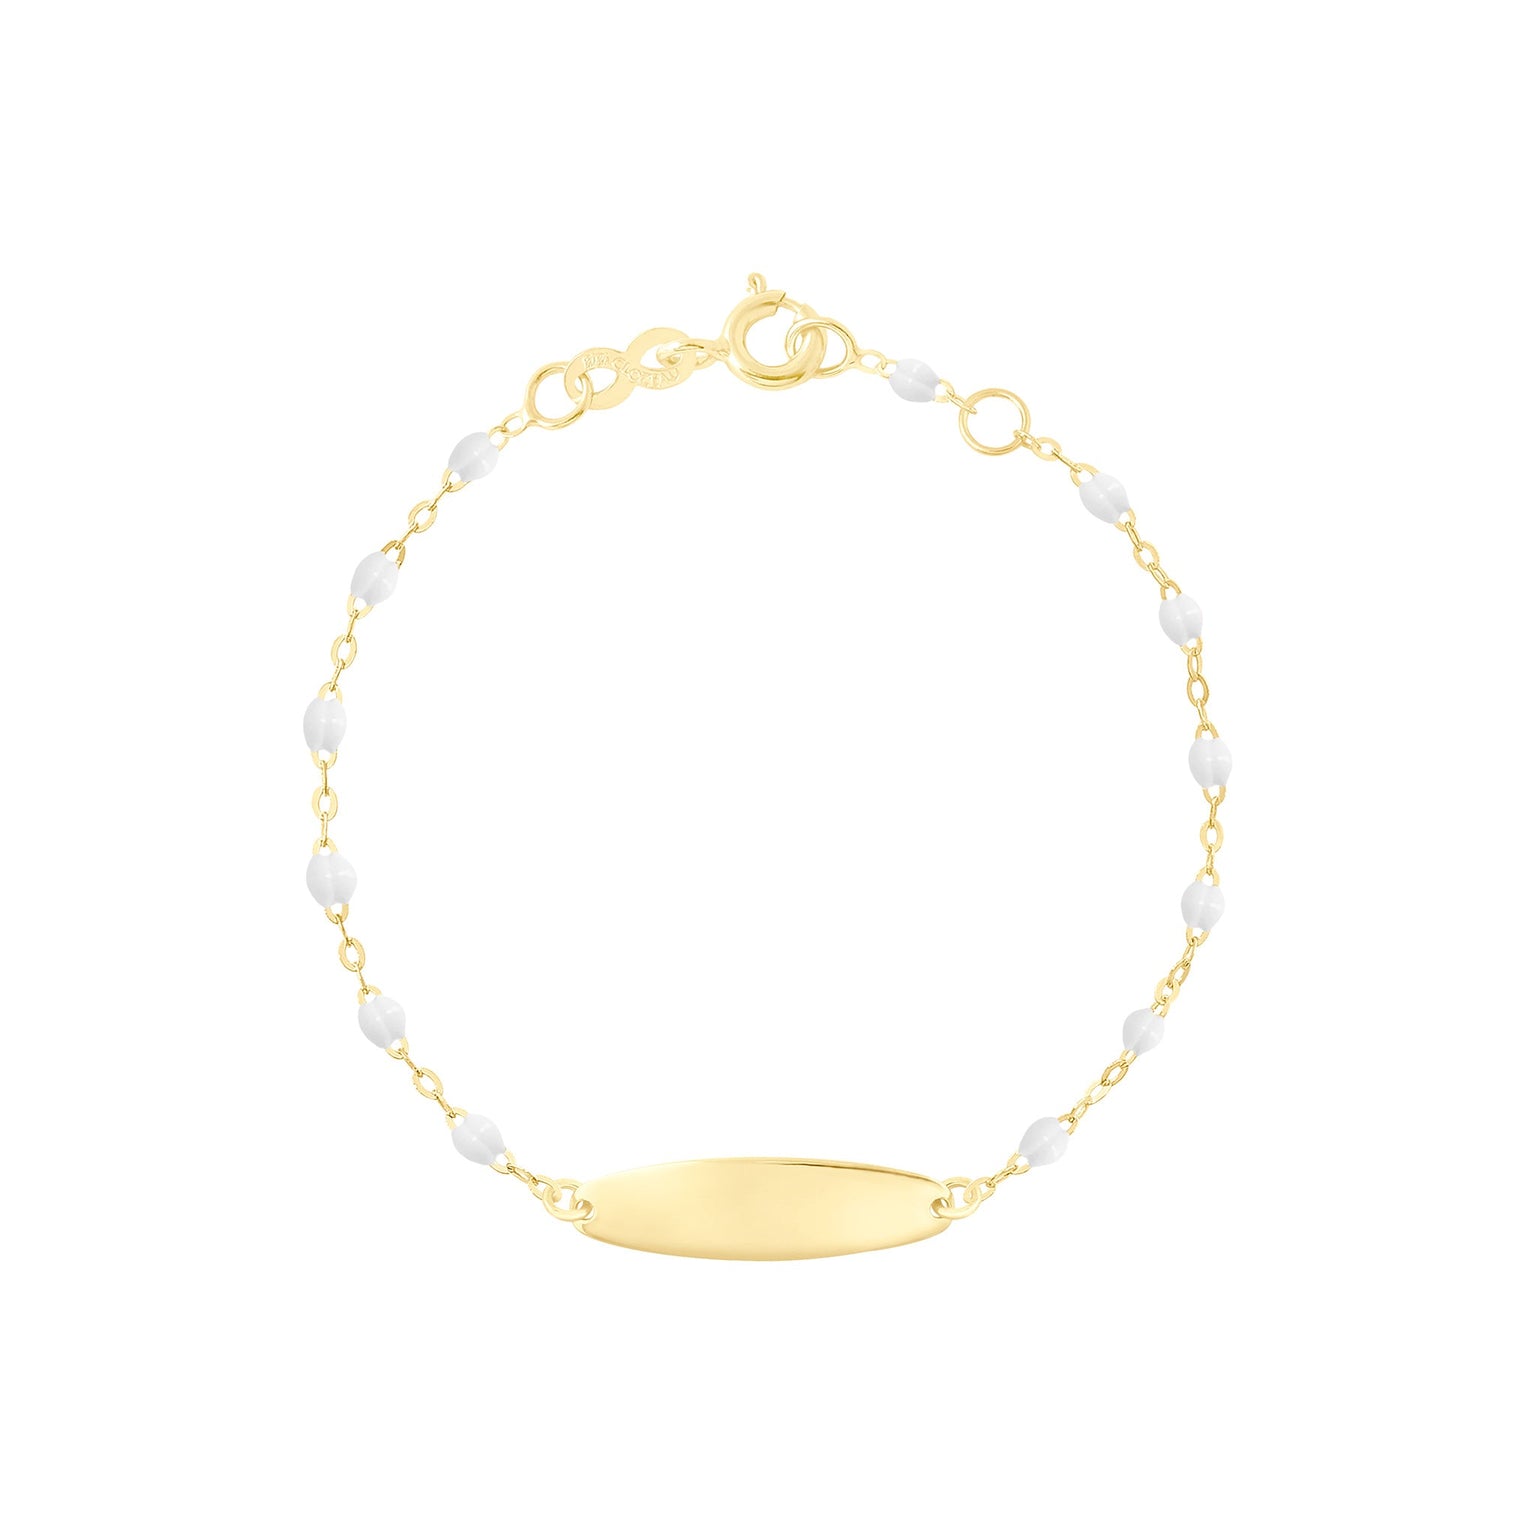 Momentoss Jewelry bracelet engraving jewellery gold